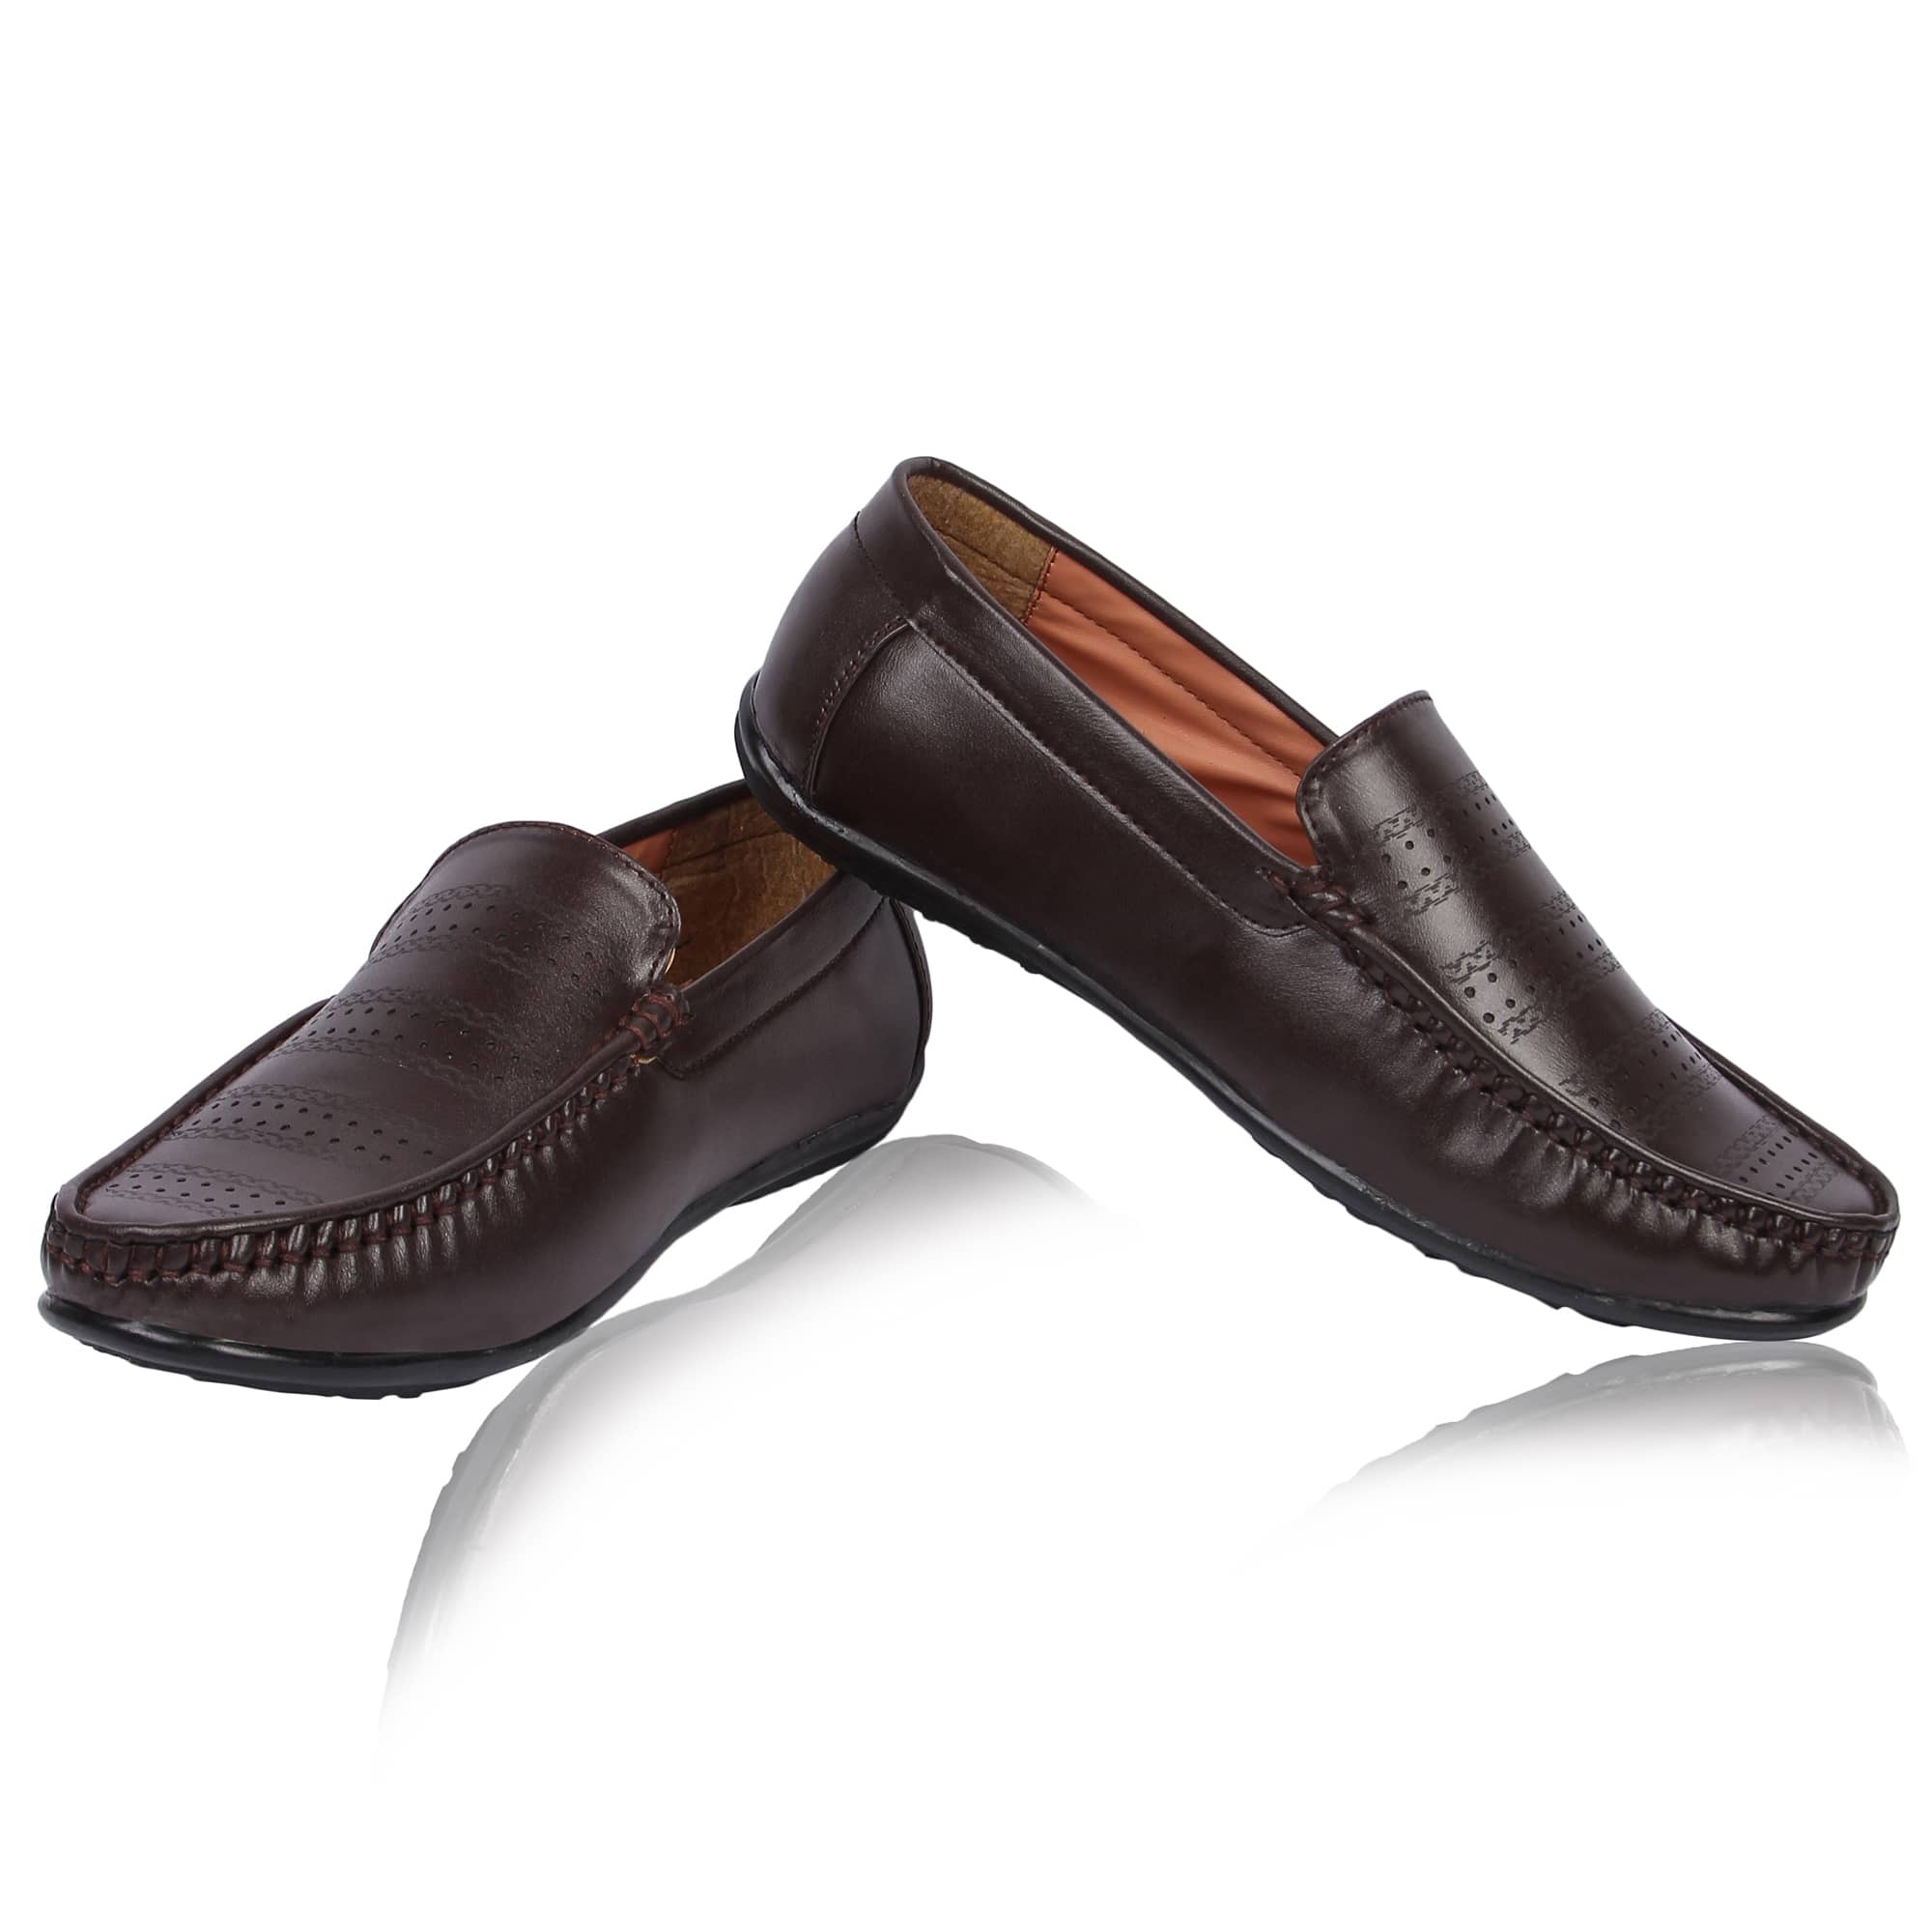 IMG_0047-min | Online Store for Men Footwear in India